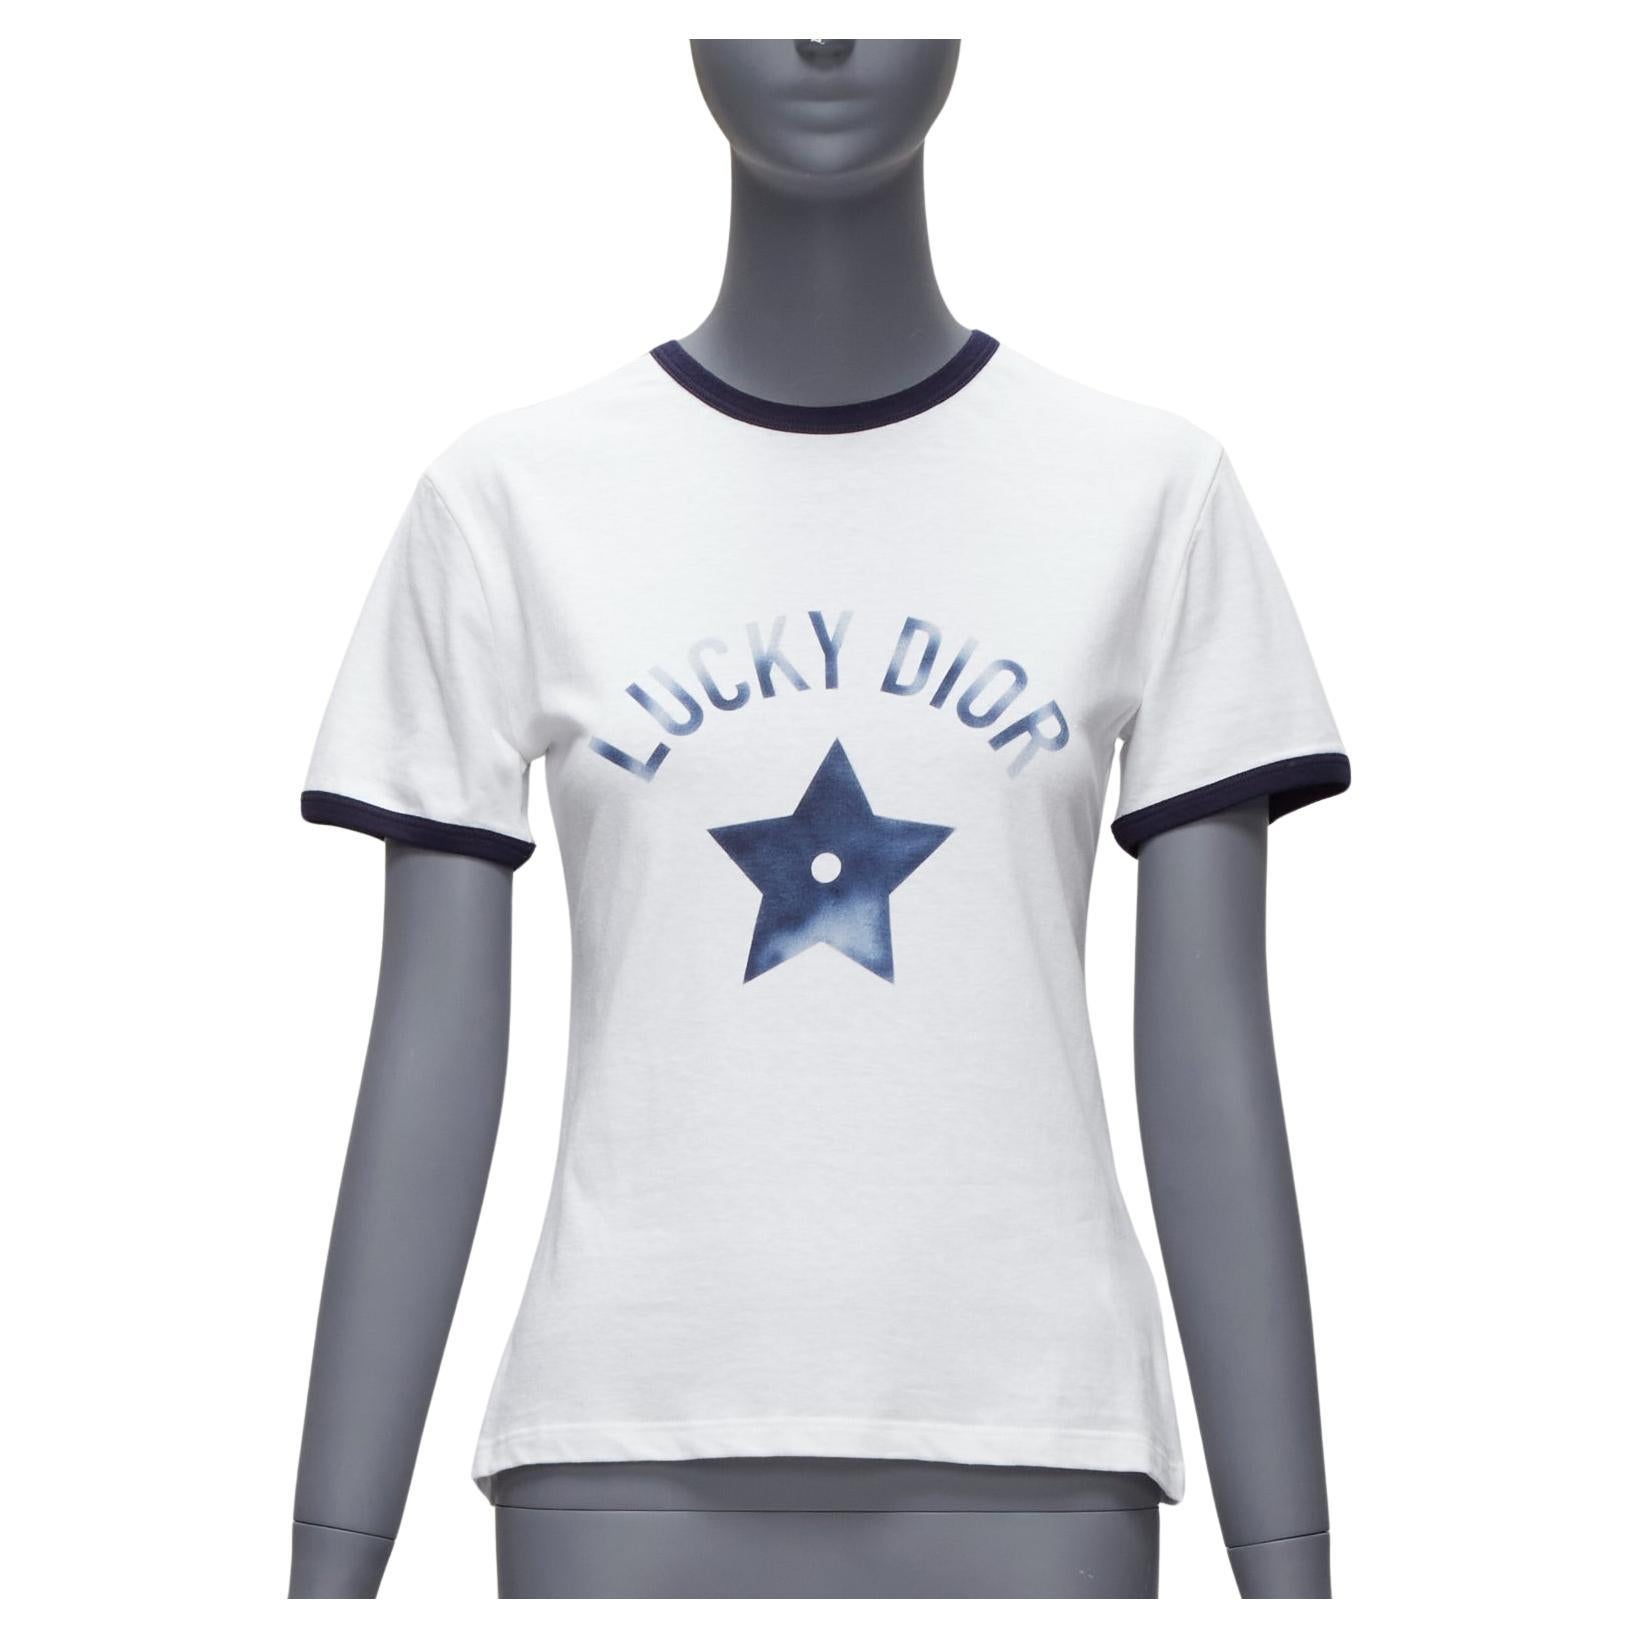 CHRISTIAN DIOR 2022 Lucky weiß blau ombre star logo ringer tshirt XS